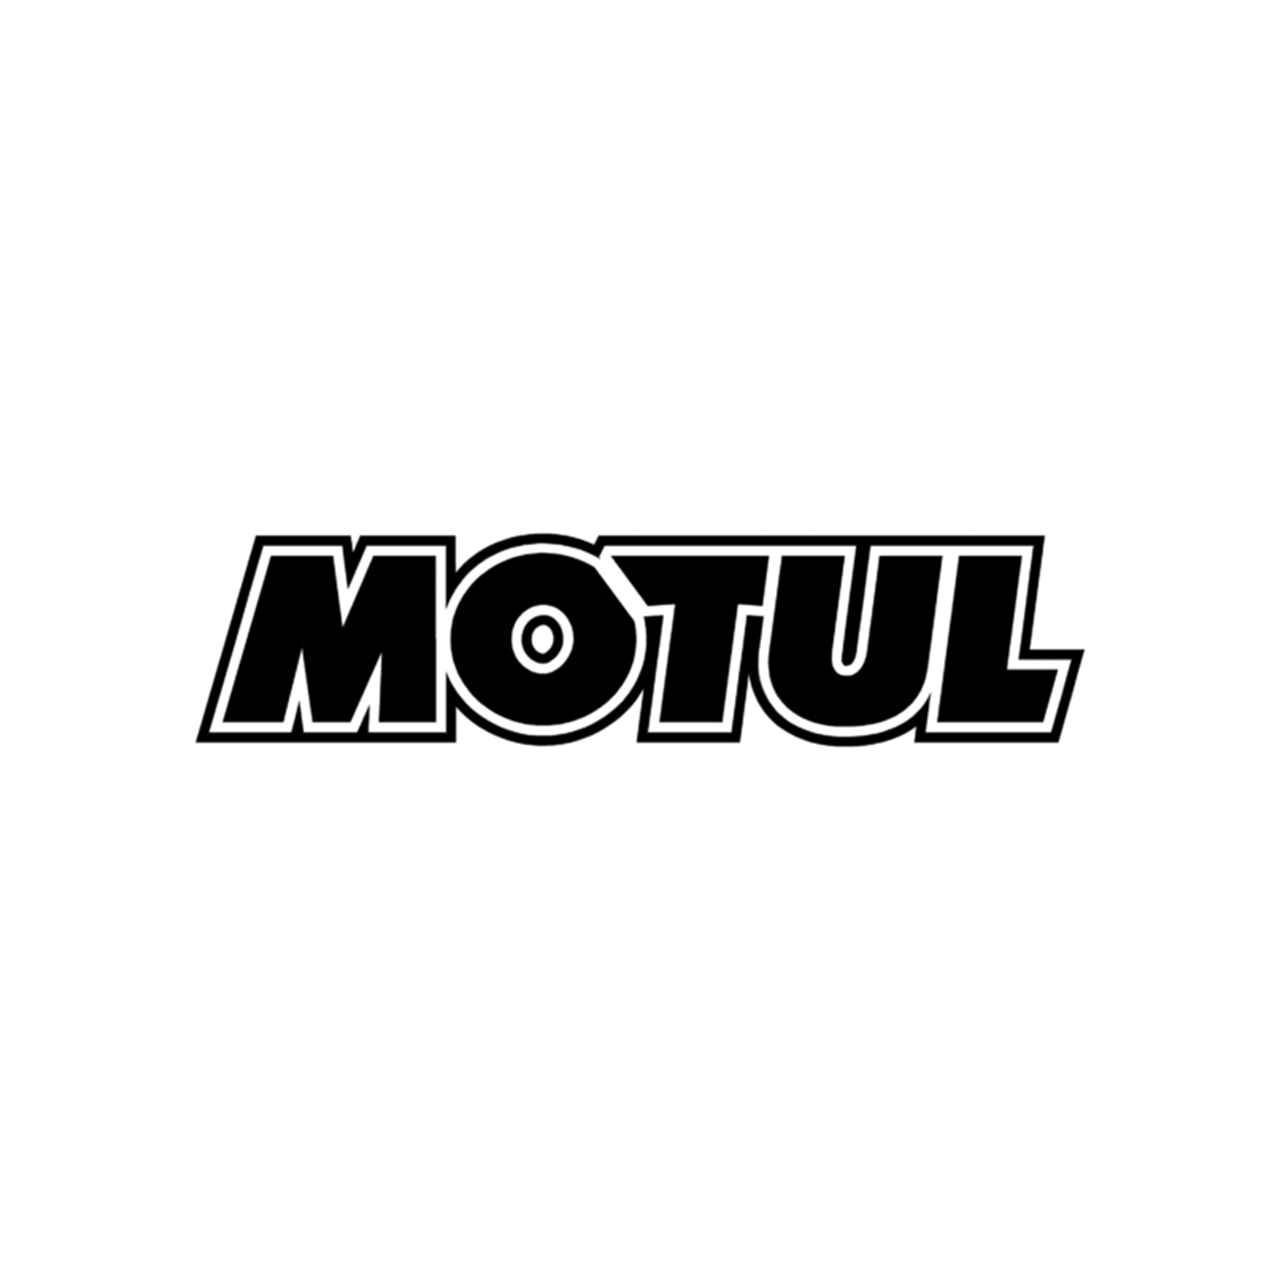 Motul Logo - Motul Logo Vinyl Decal